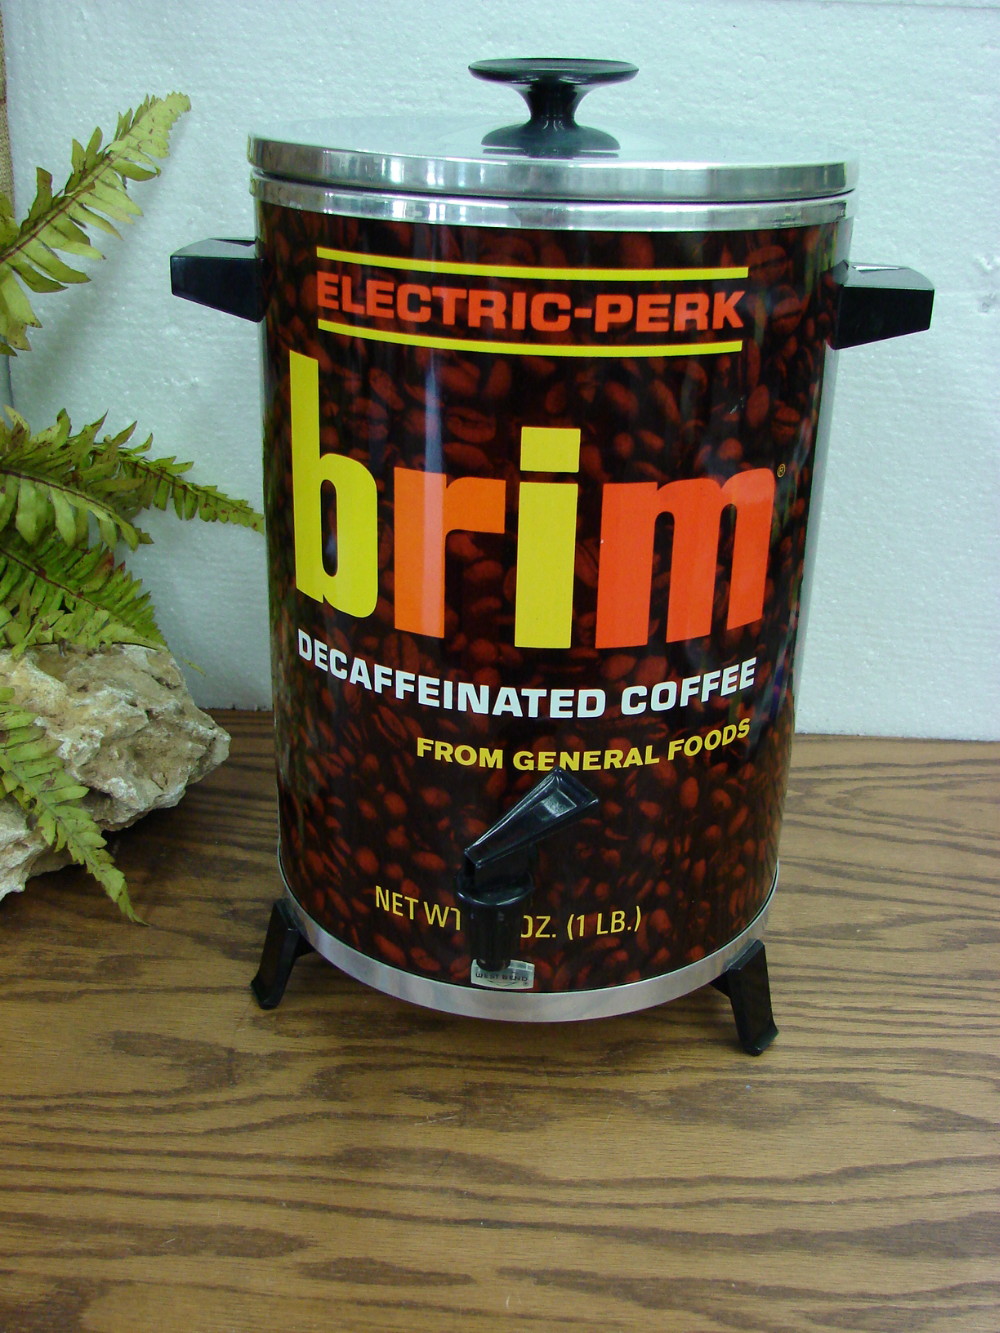 Brim Coffee